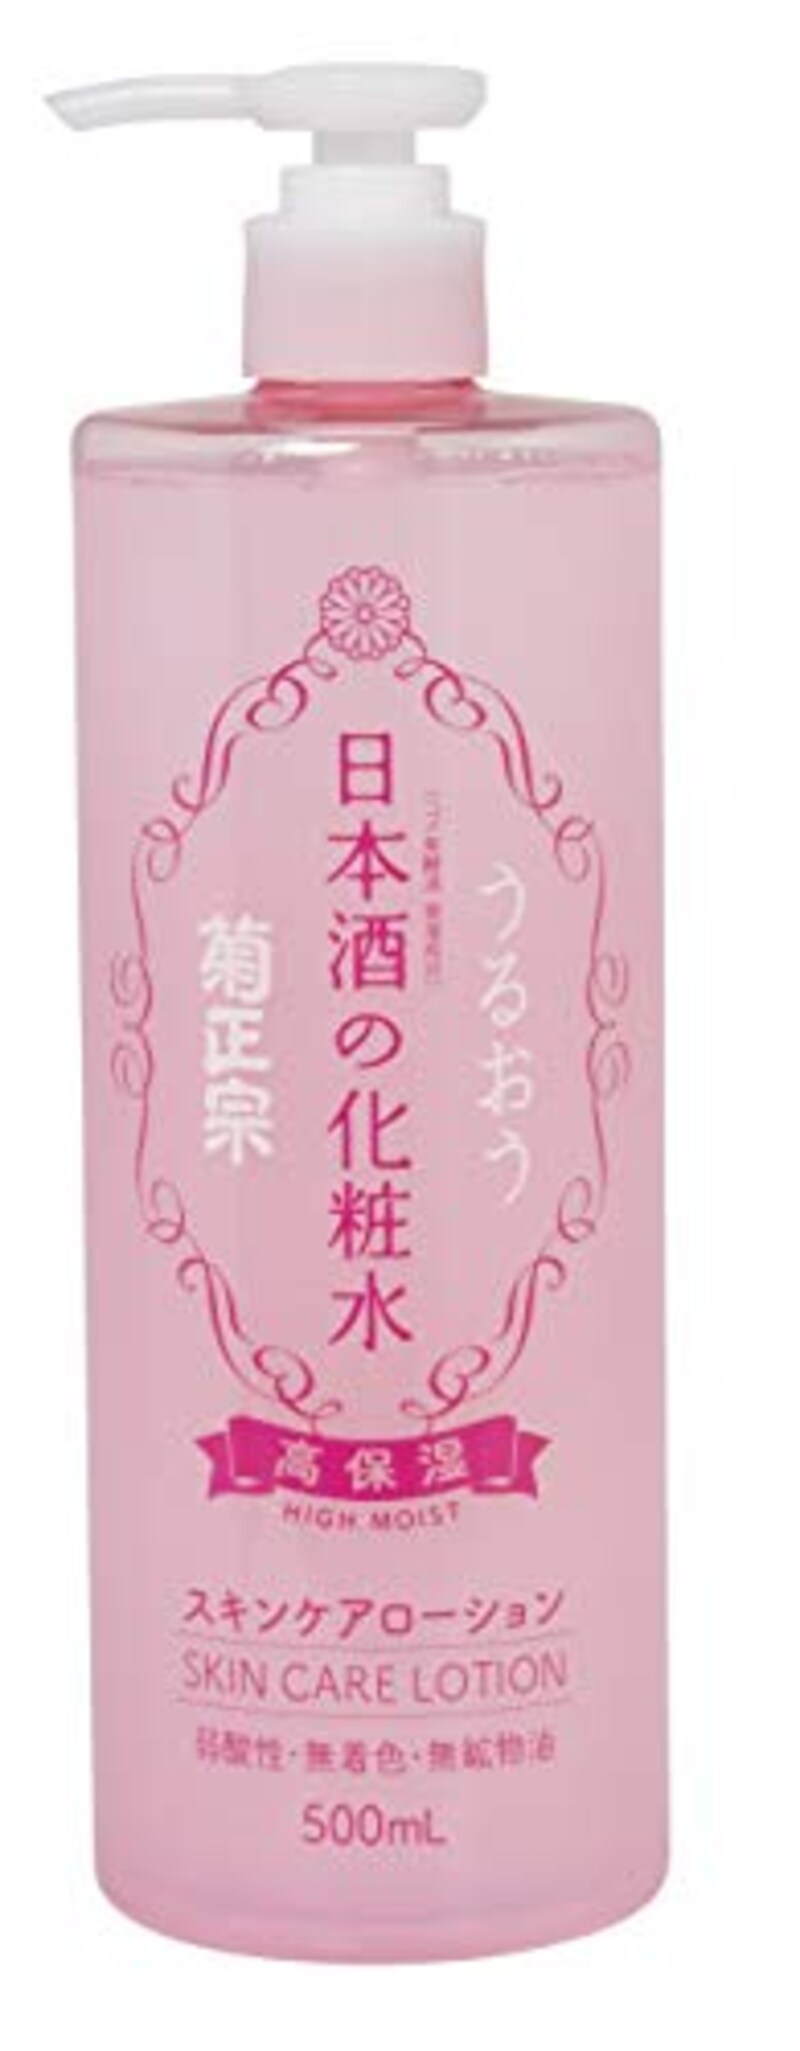 菊正宗,日本酒の化粧水